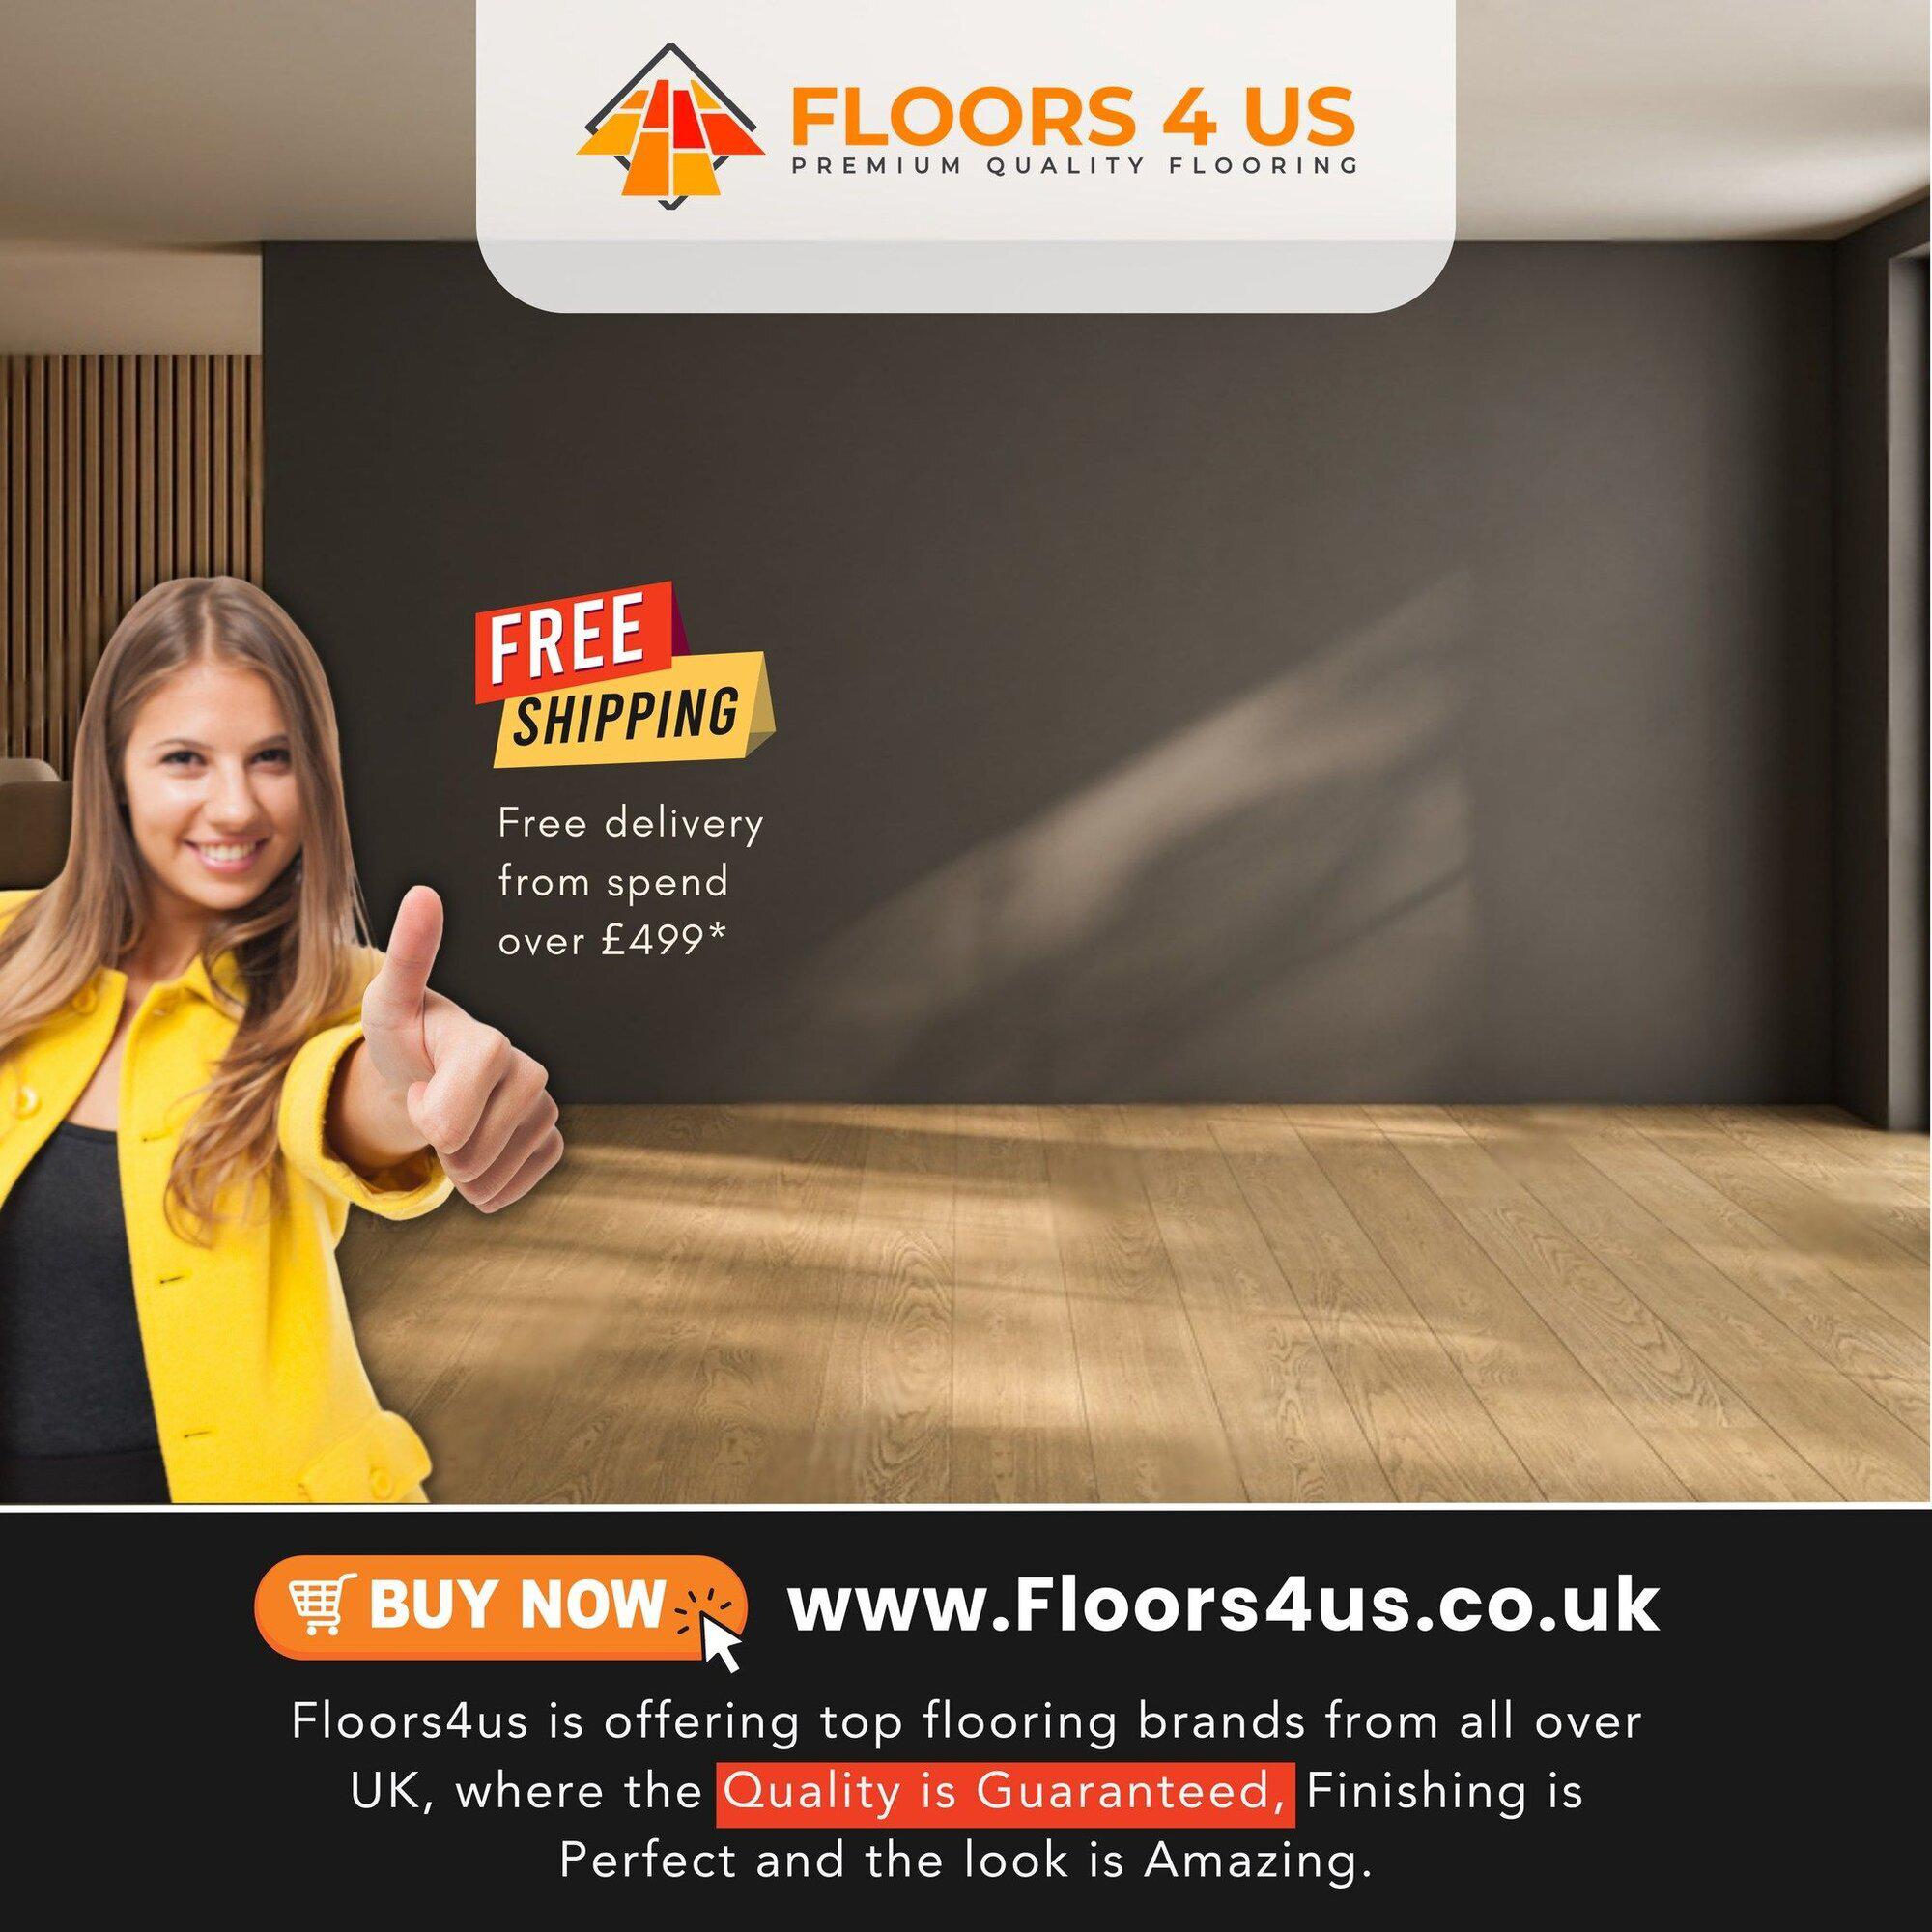 Images Floors4us.co.uk